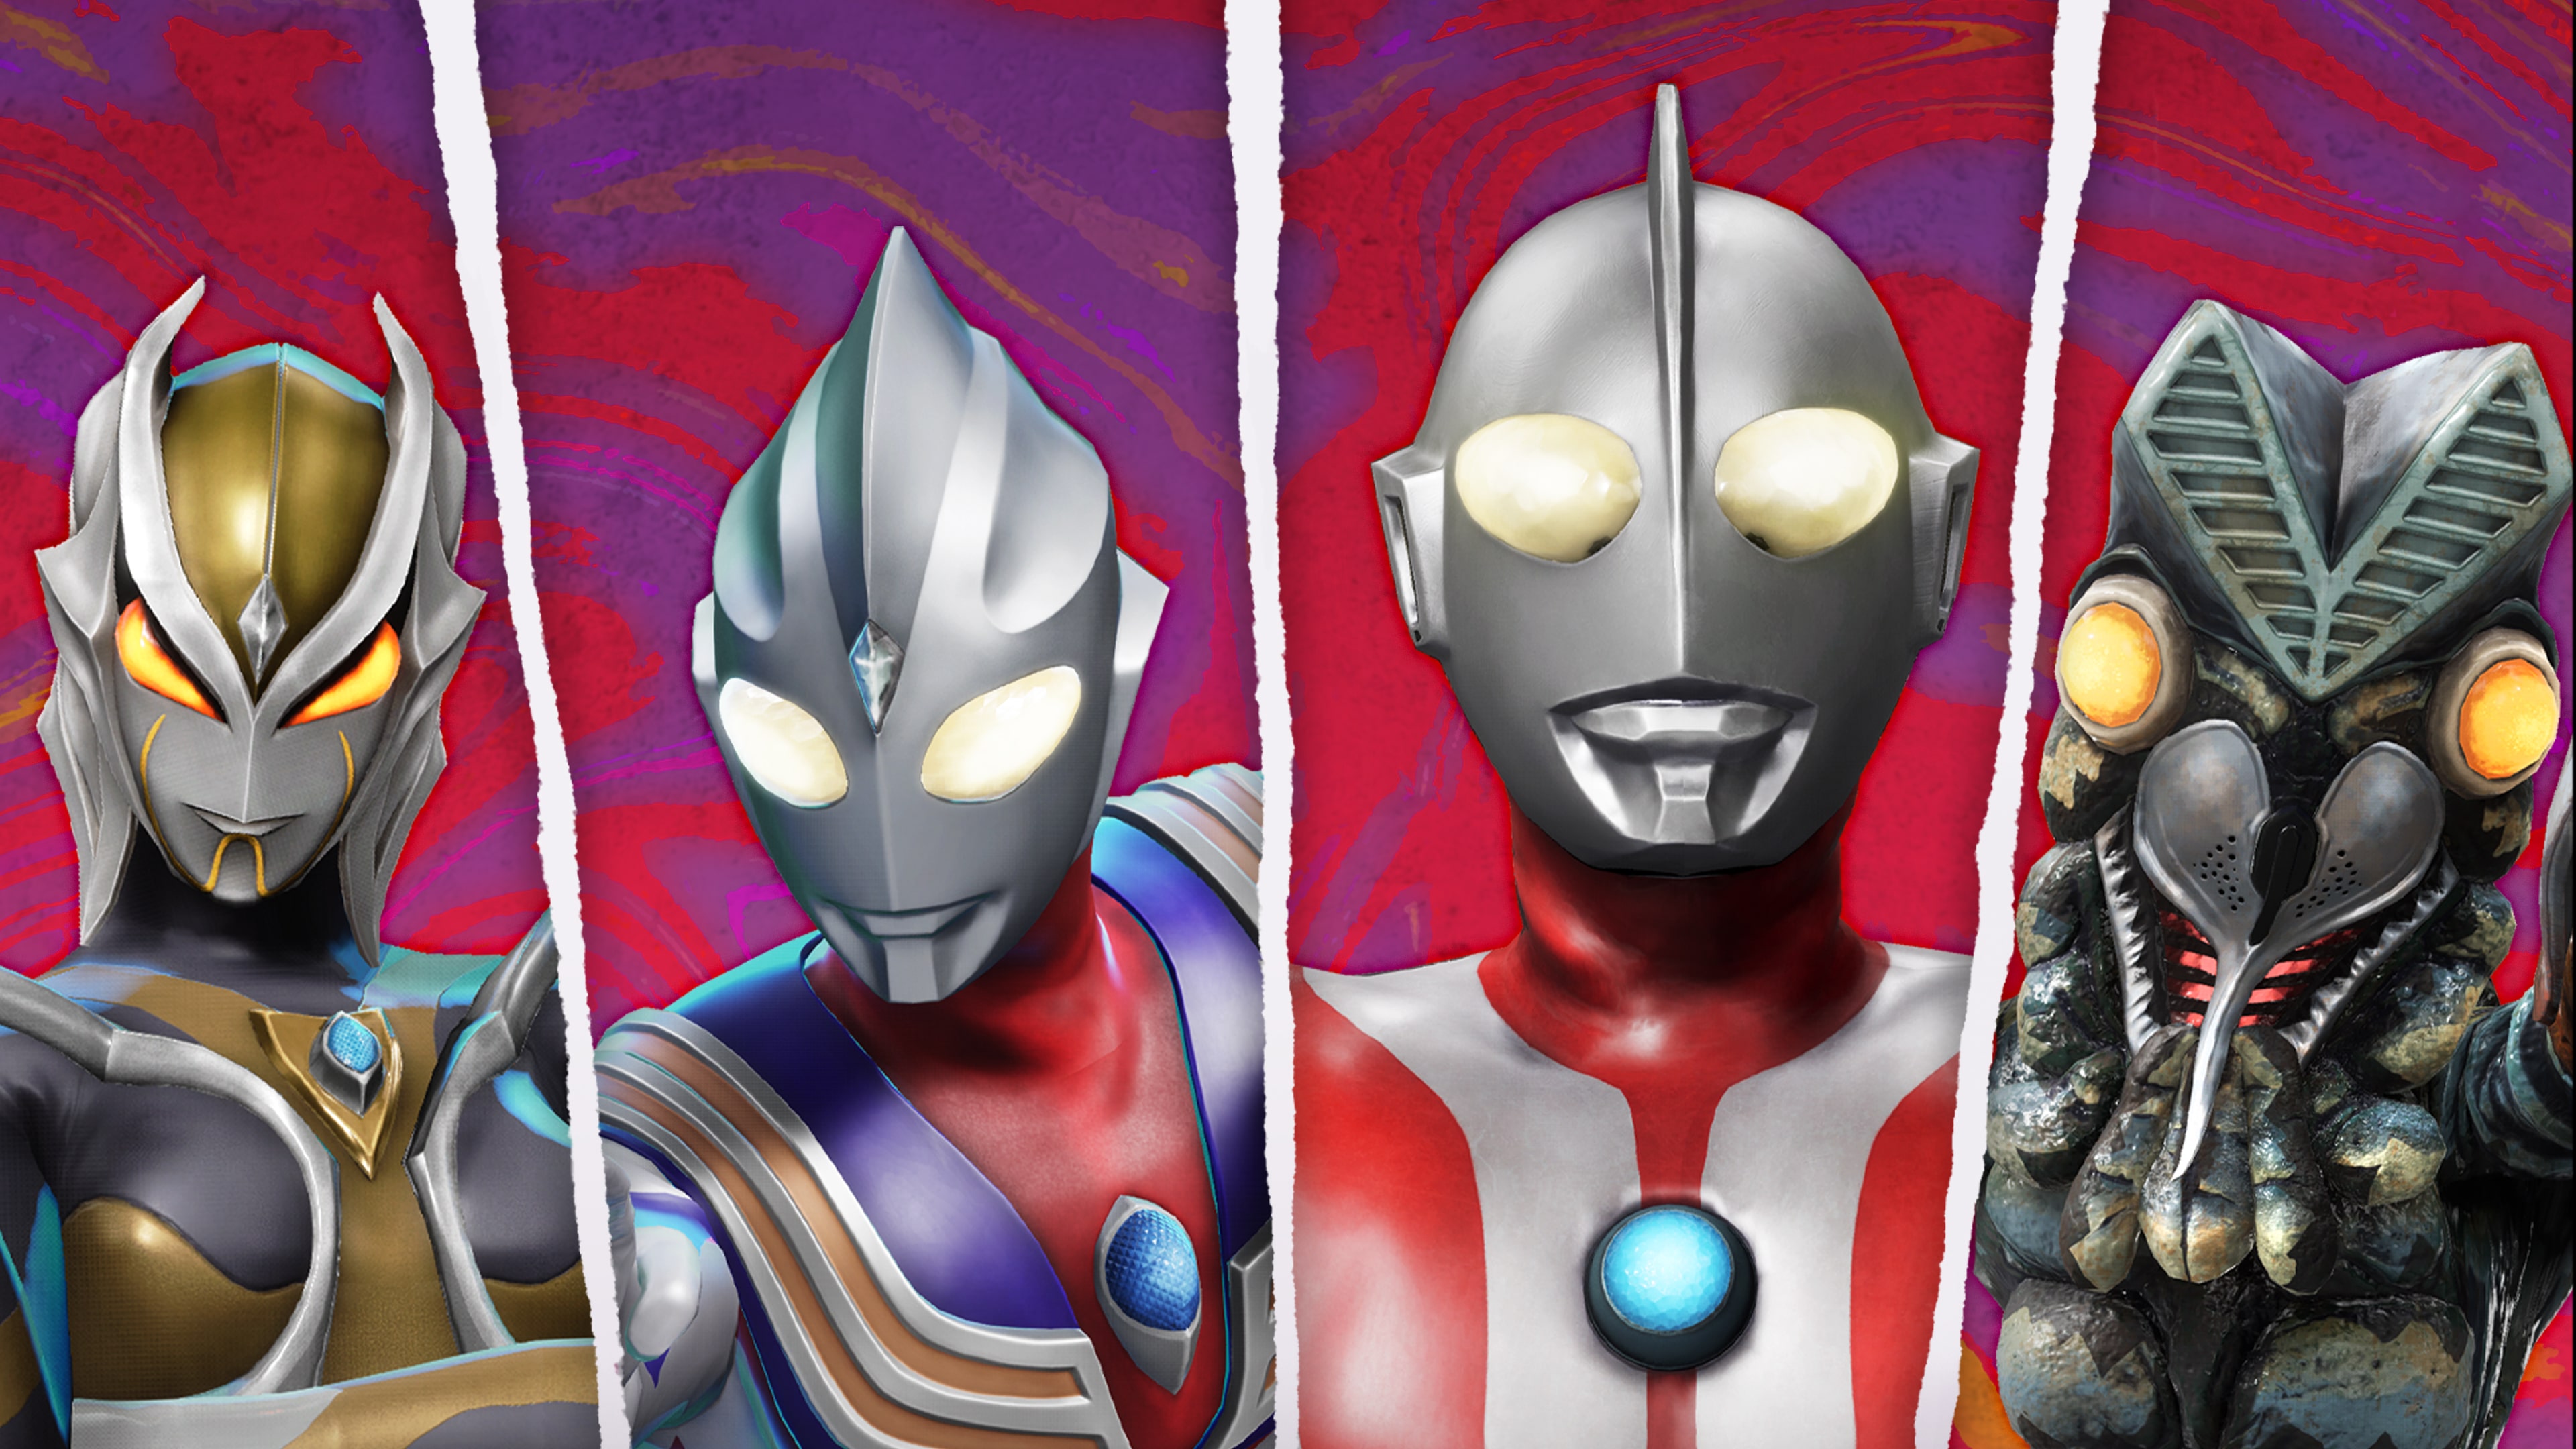 GigaBash - Ultraman 4 Characters Pack DLC (English/Chinese/Korean/Japanese Ver.)